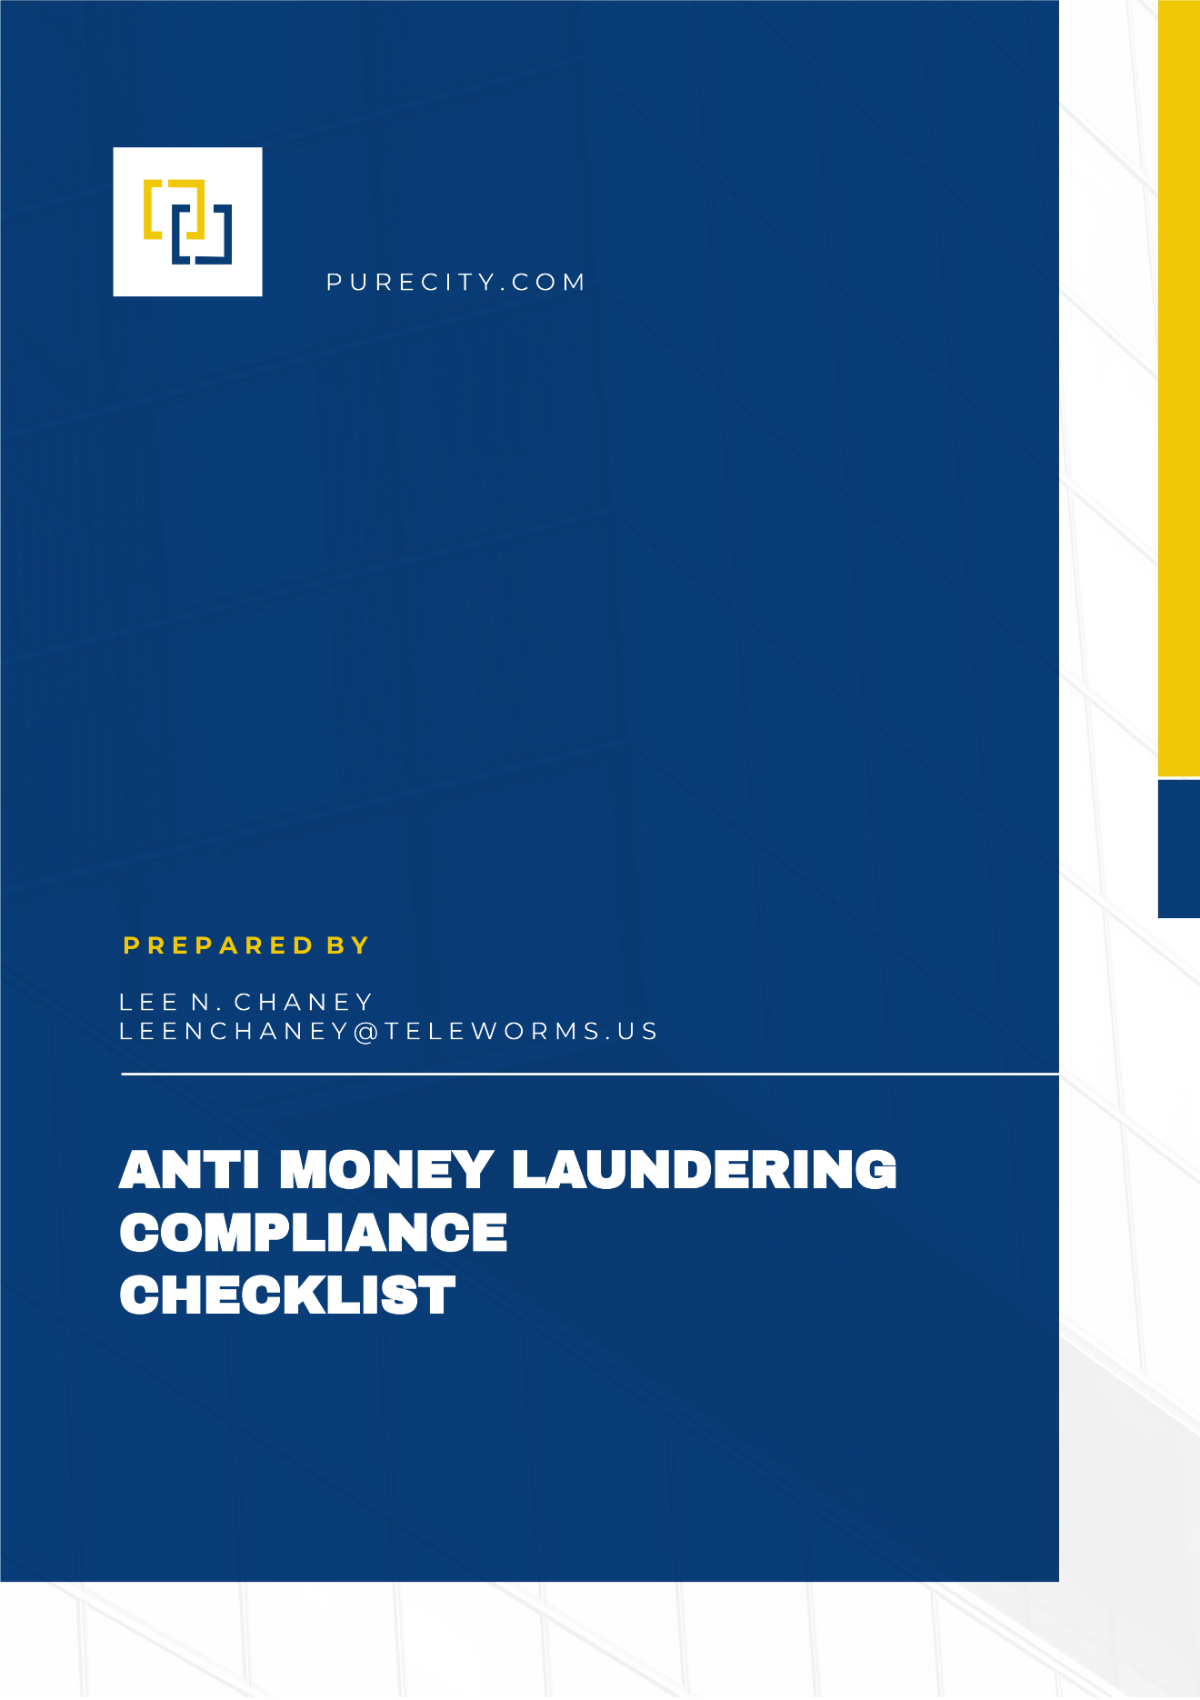 Anti Money Laundering Compliance Checklist Template